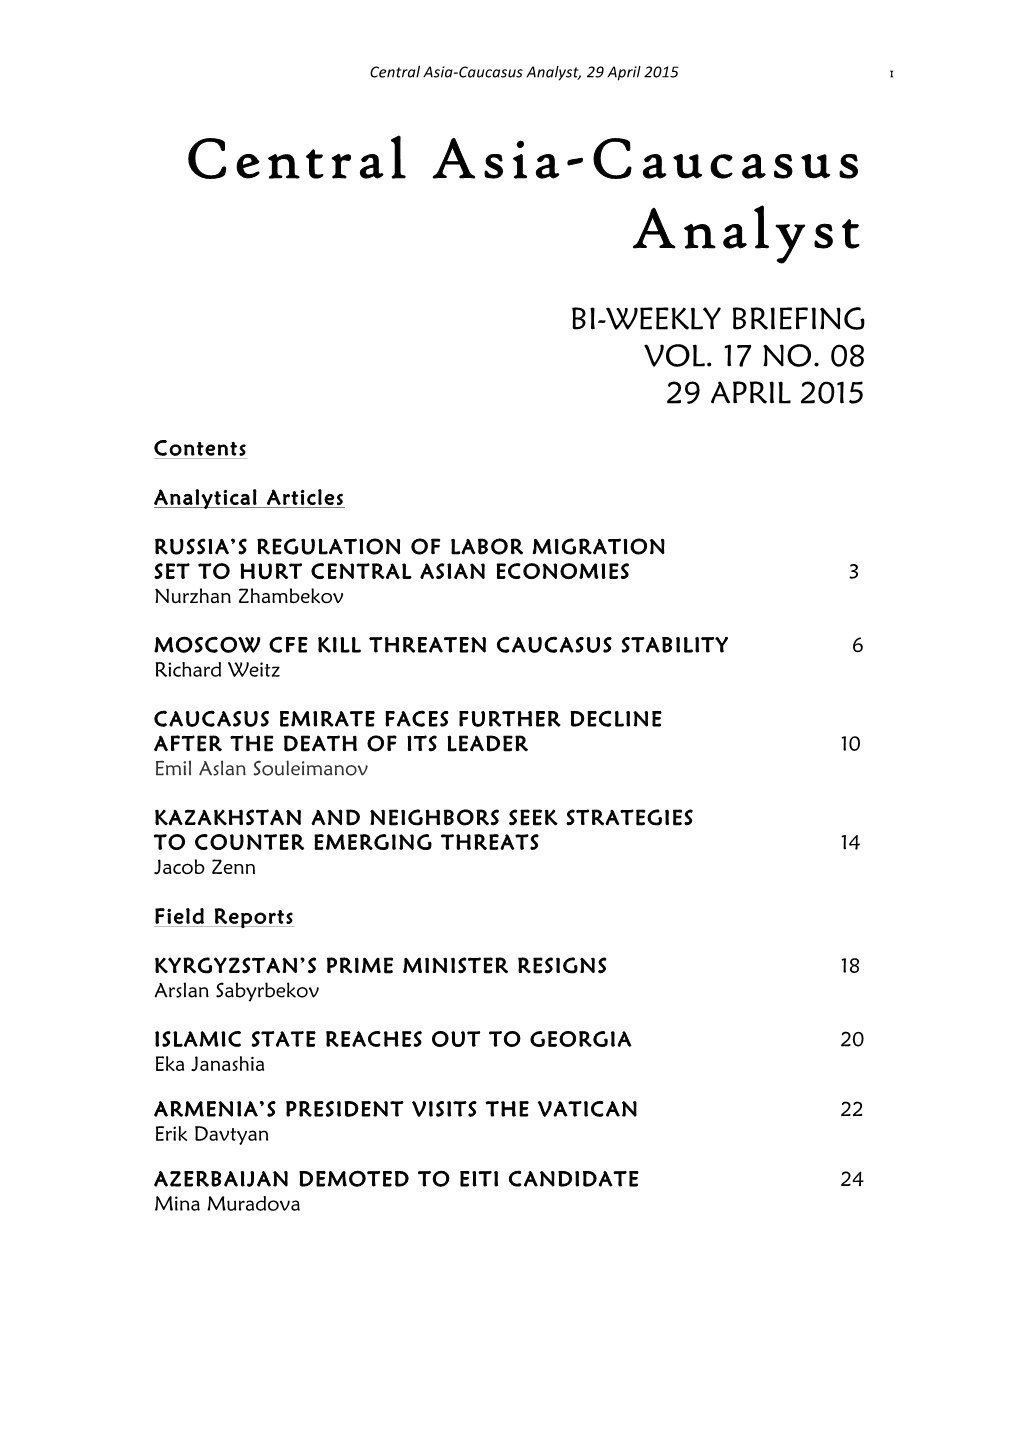 CACI Analyst, April 29, 2015